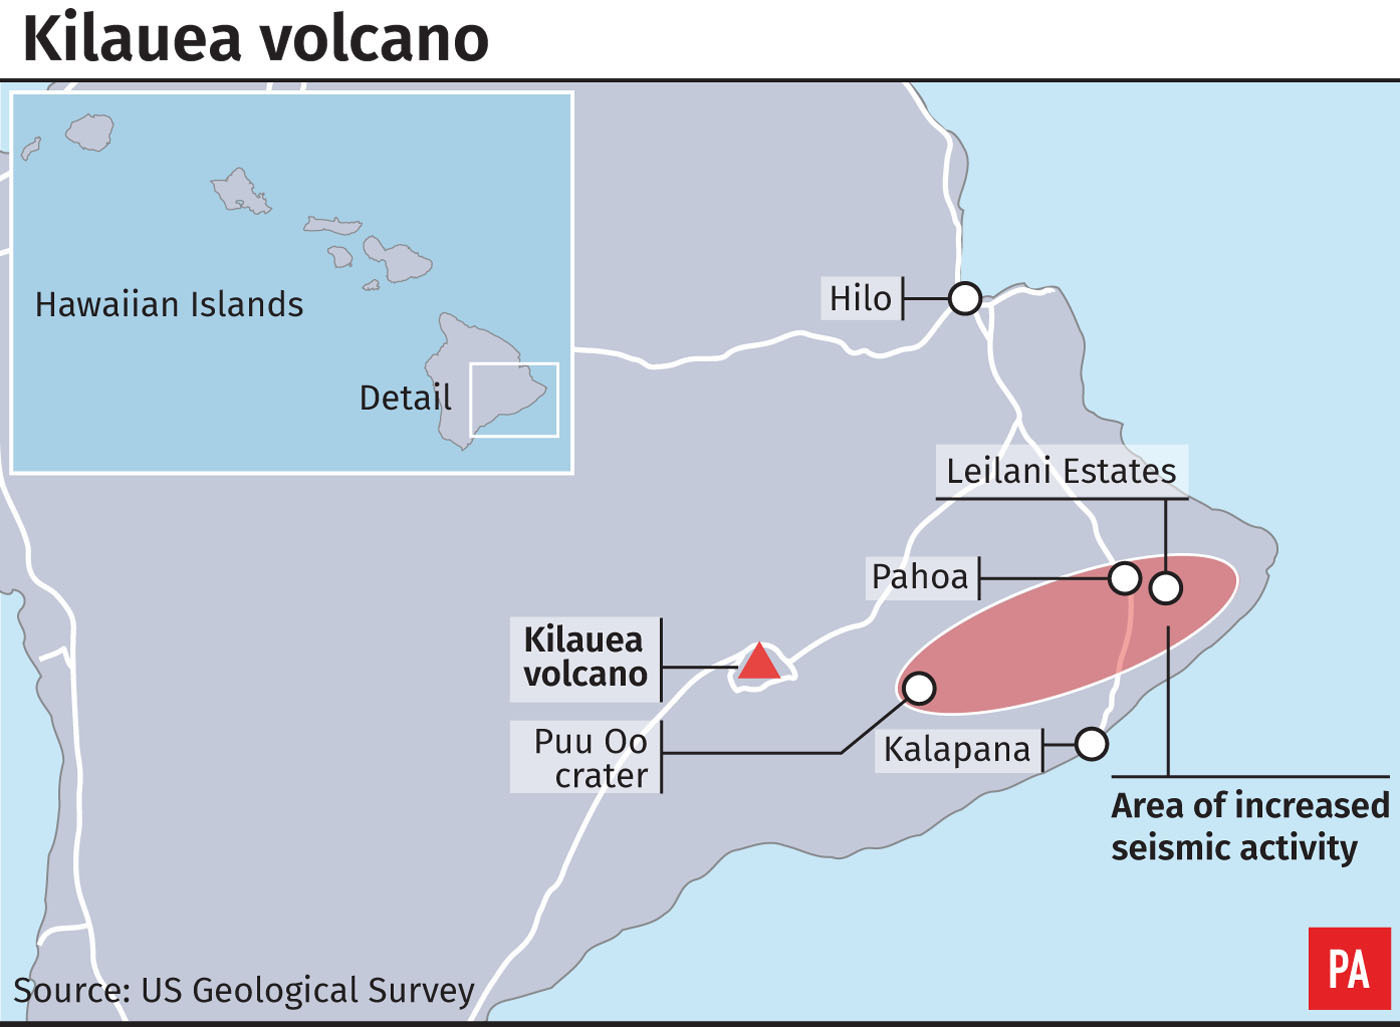 Graphic locates Kilauea volcano on Hawaii